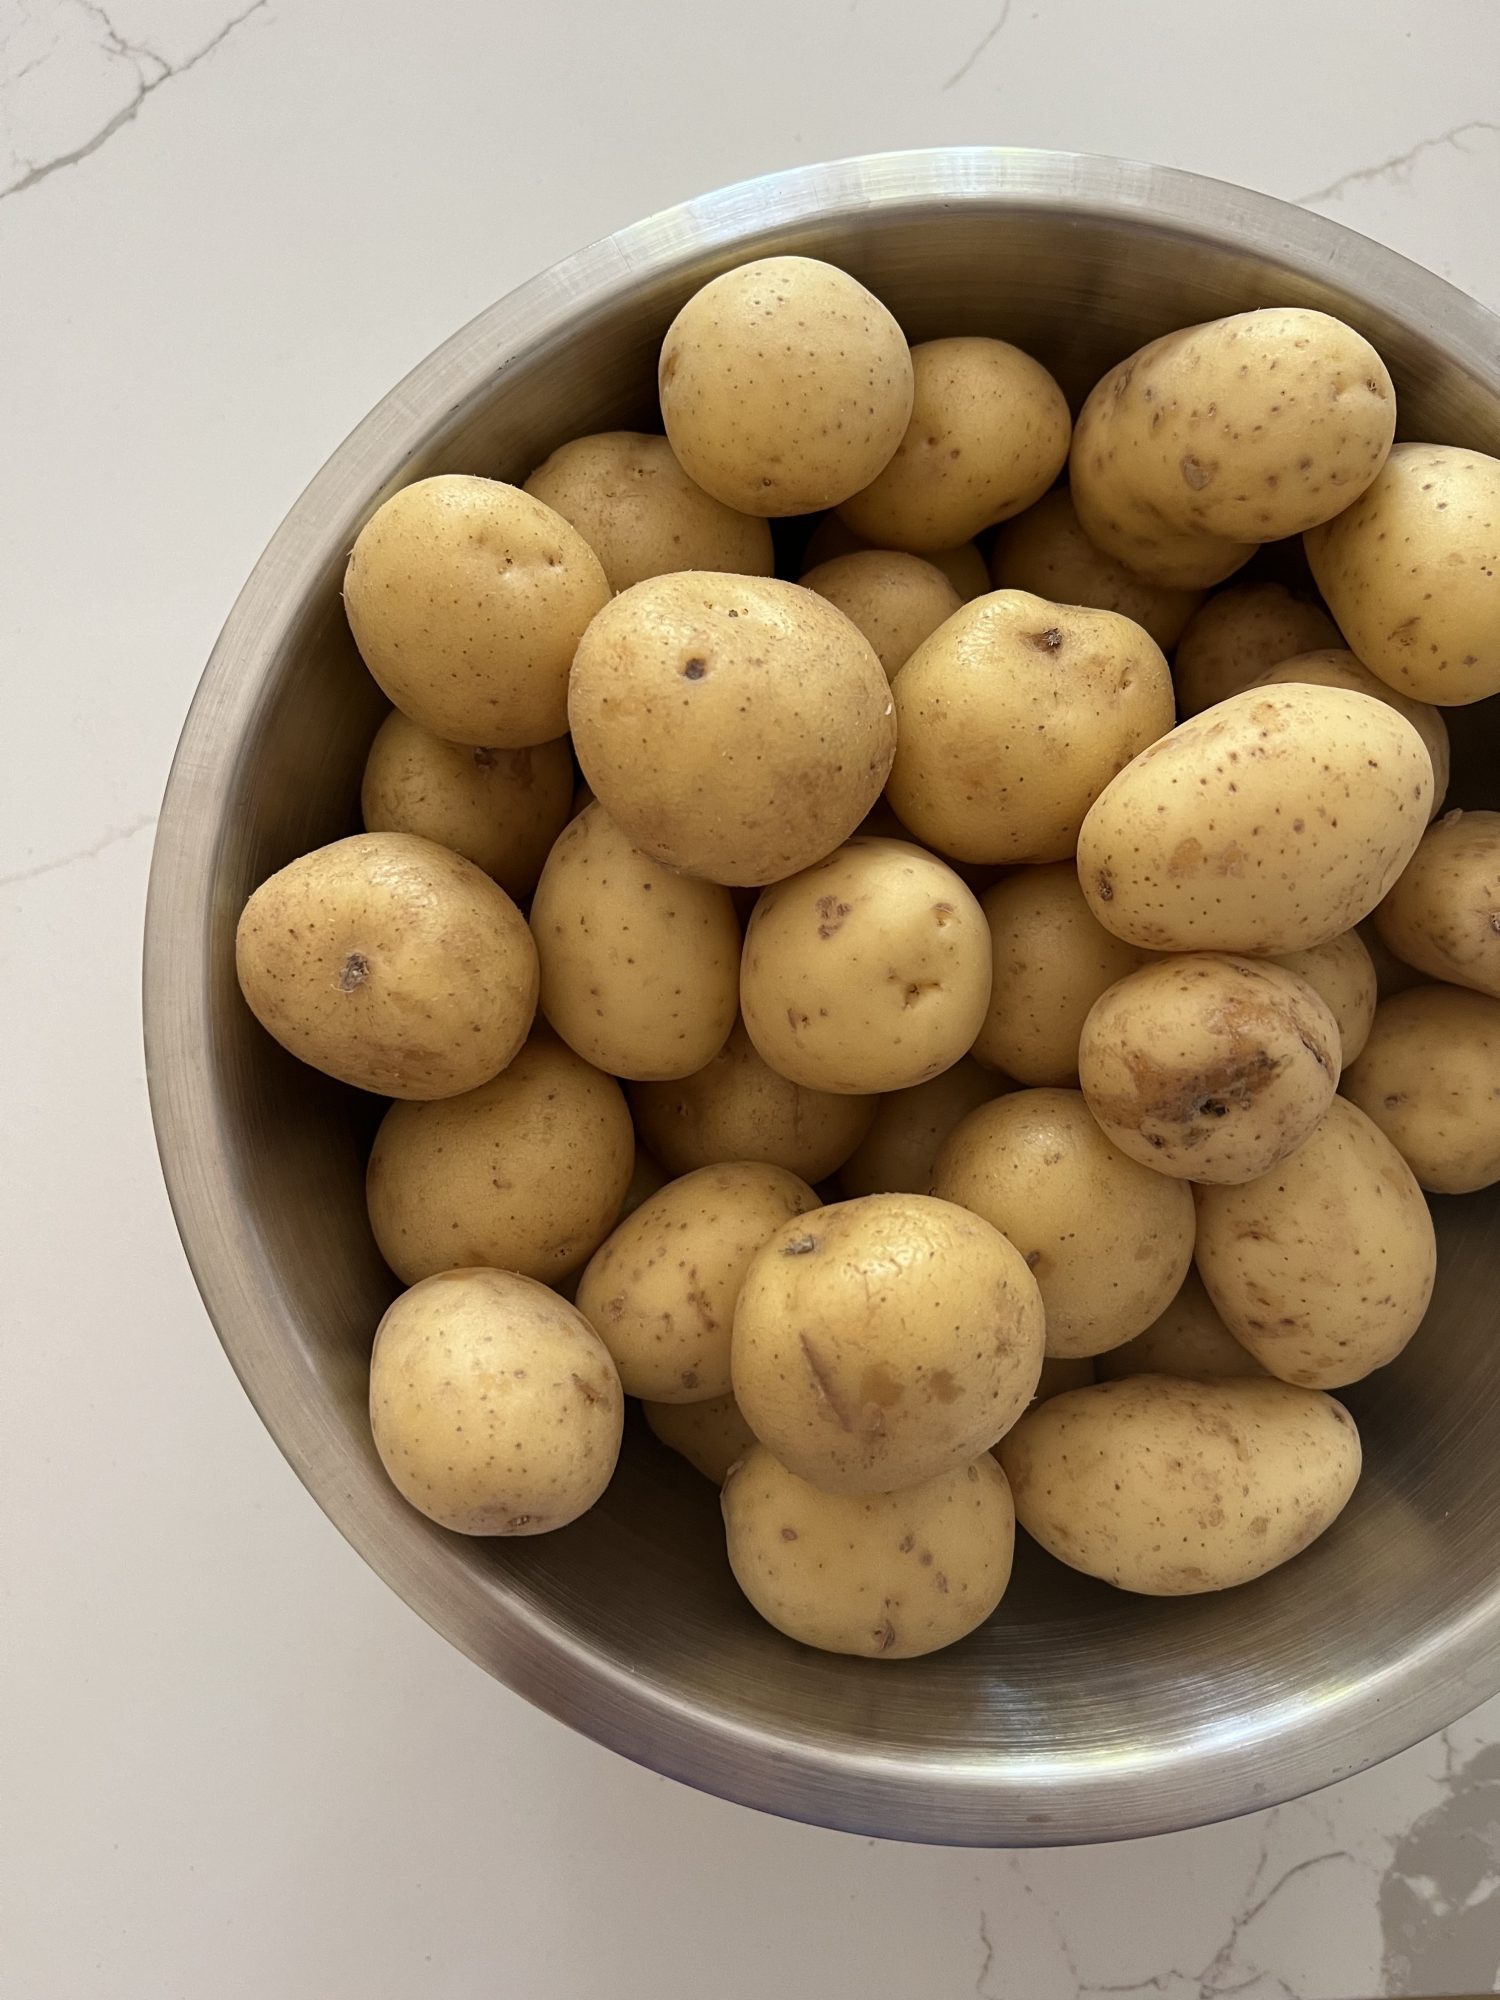 A bowl of potatoes.